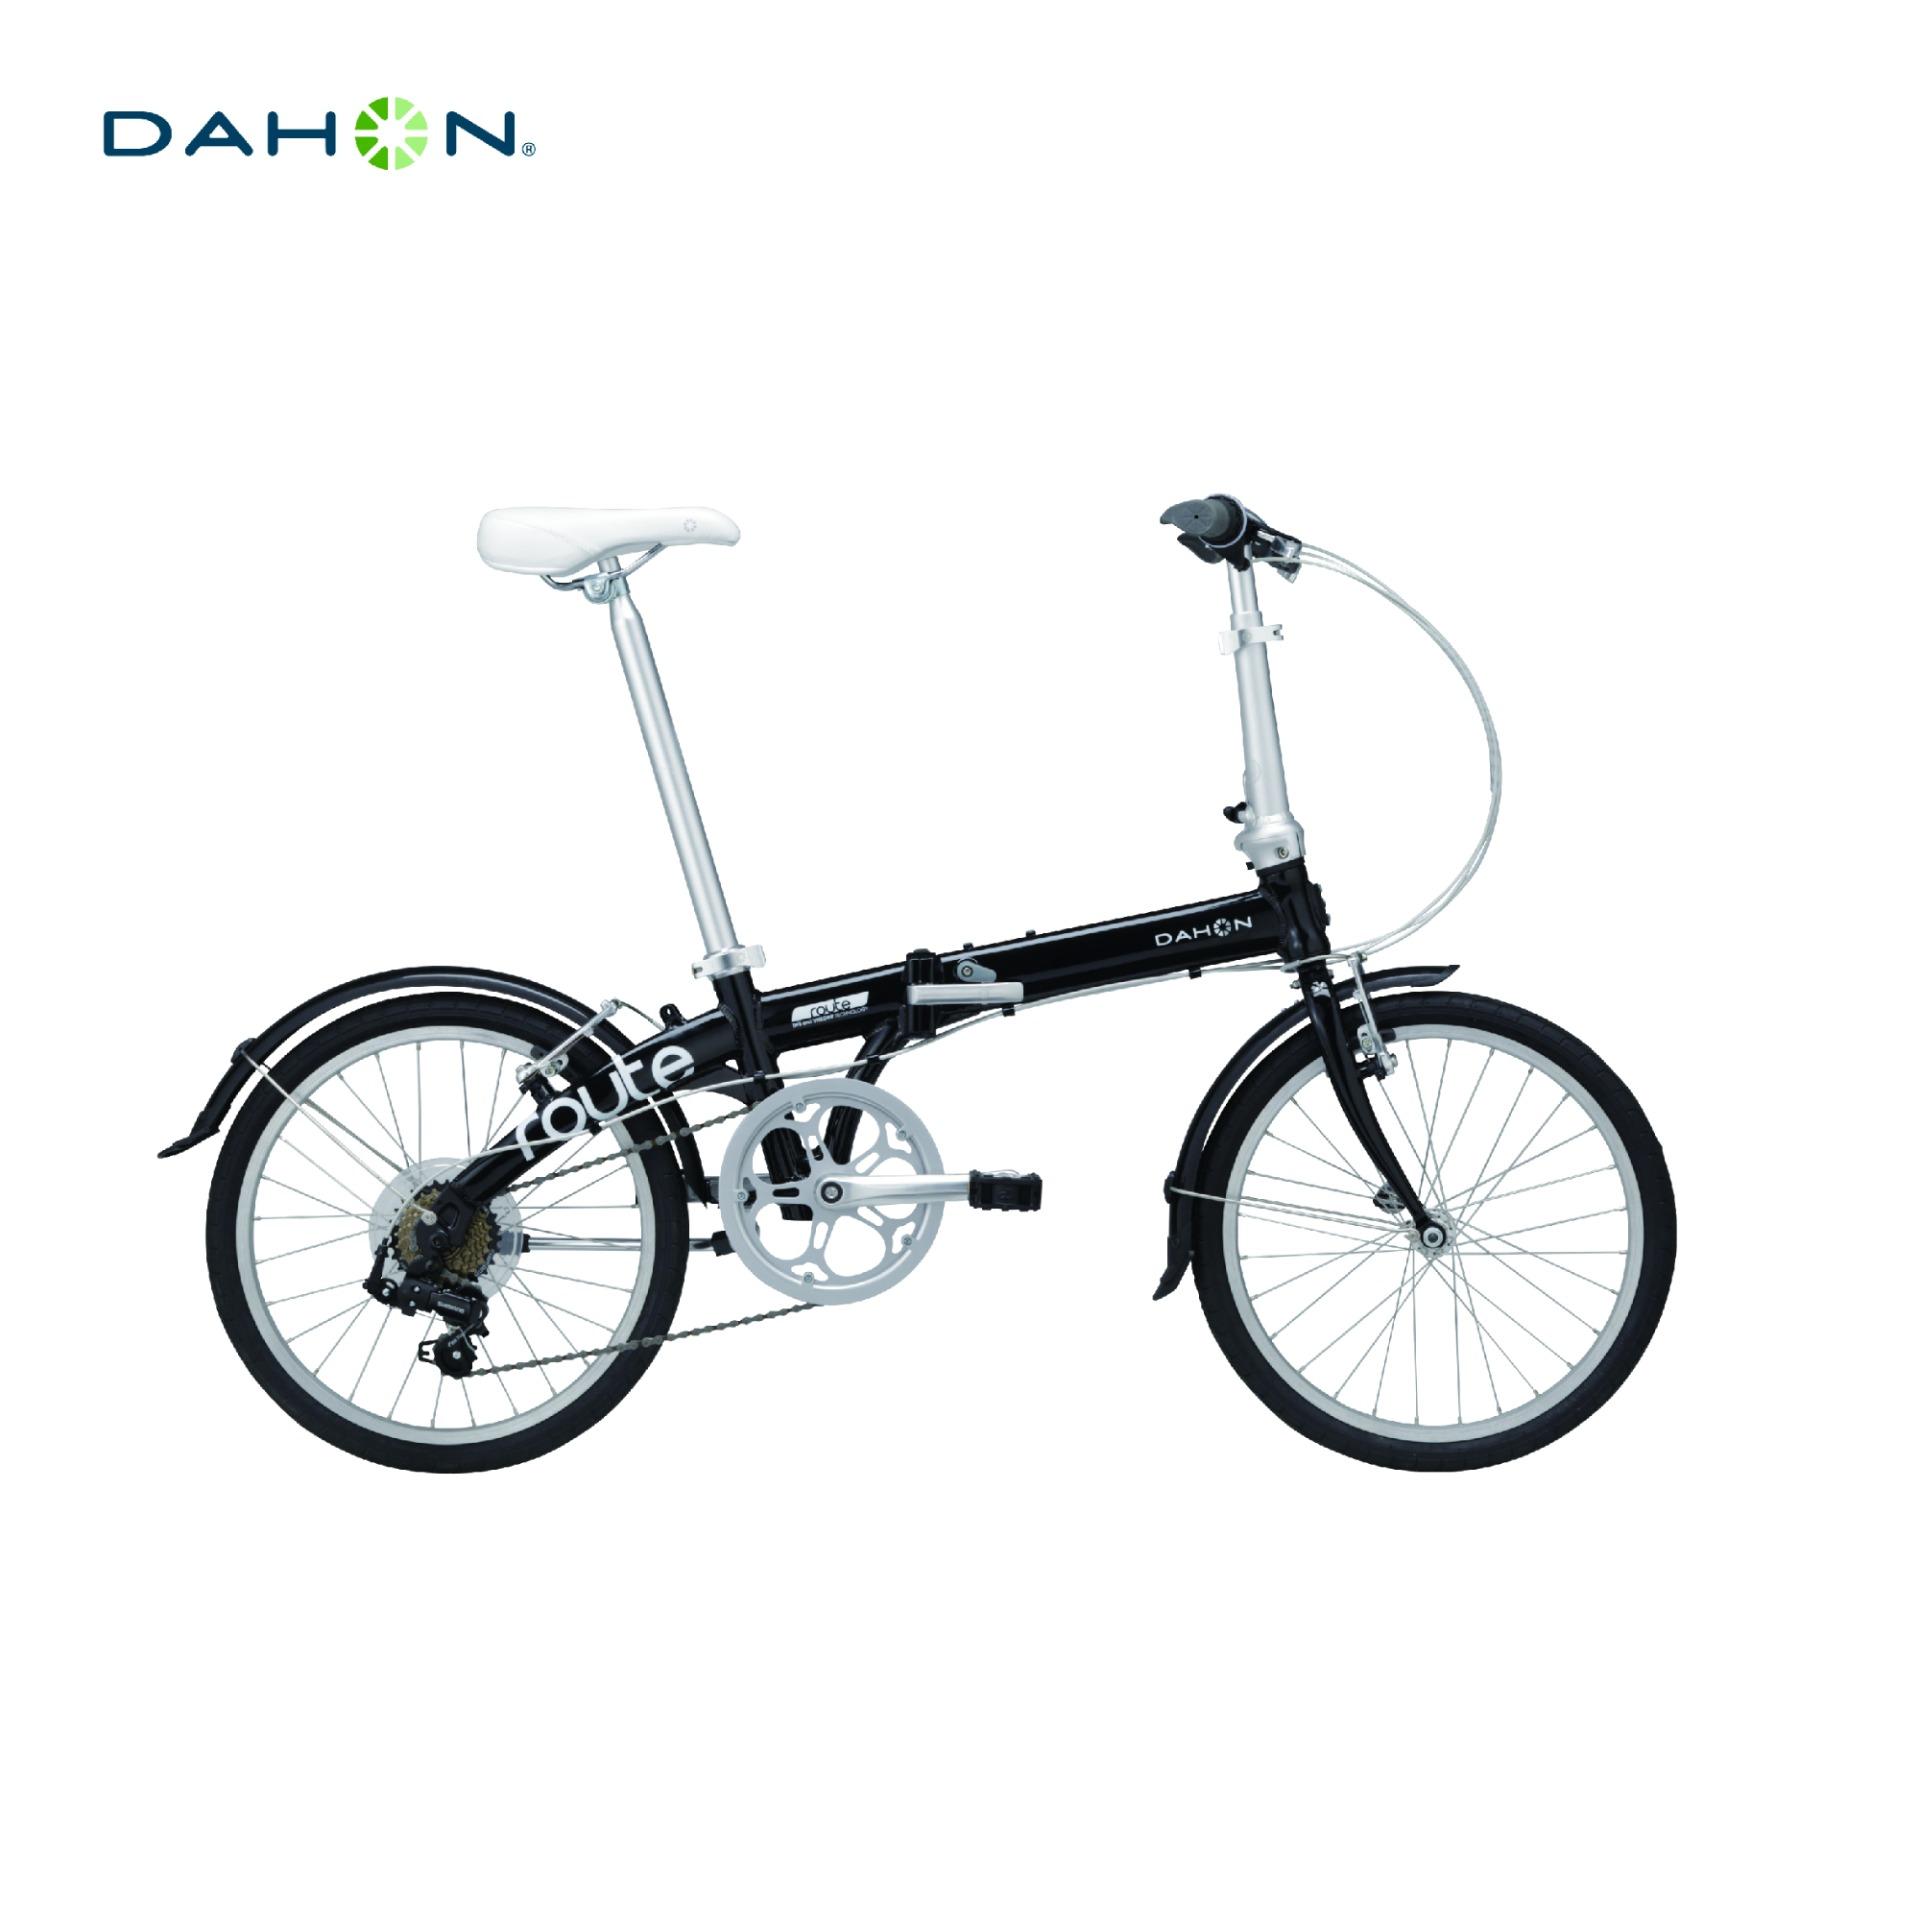 dahon bike price